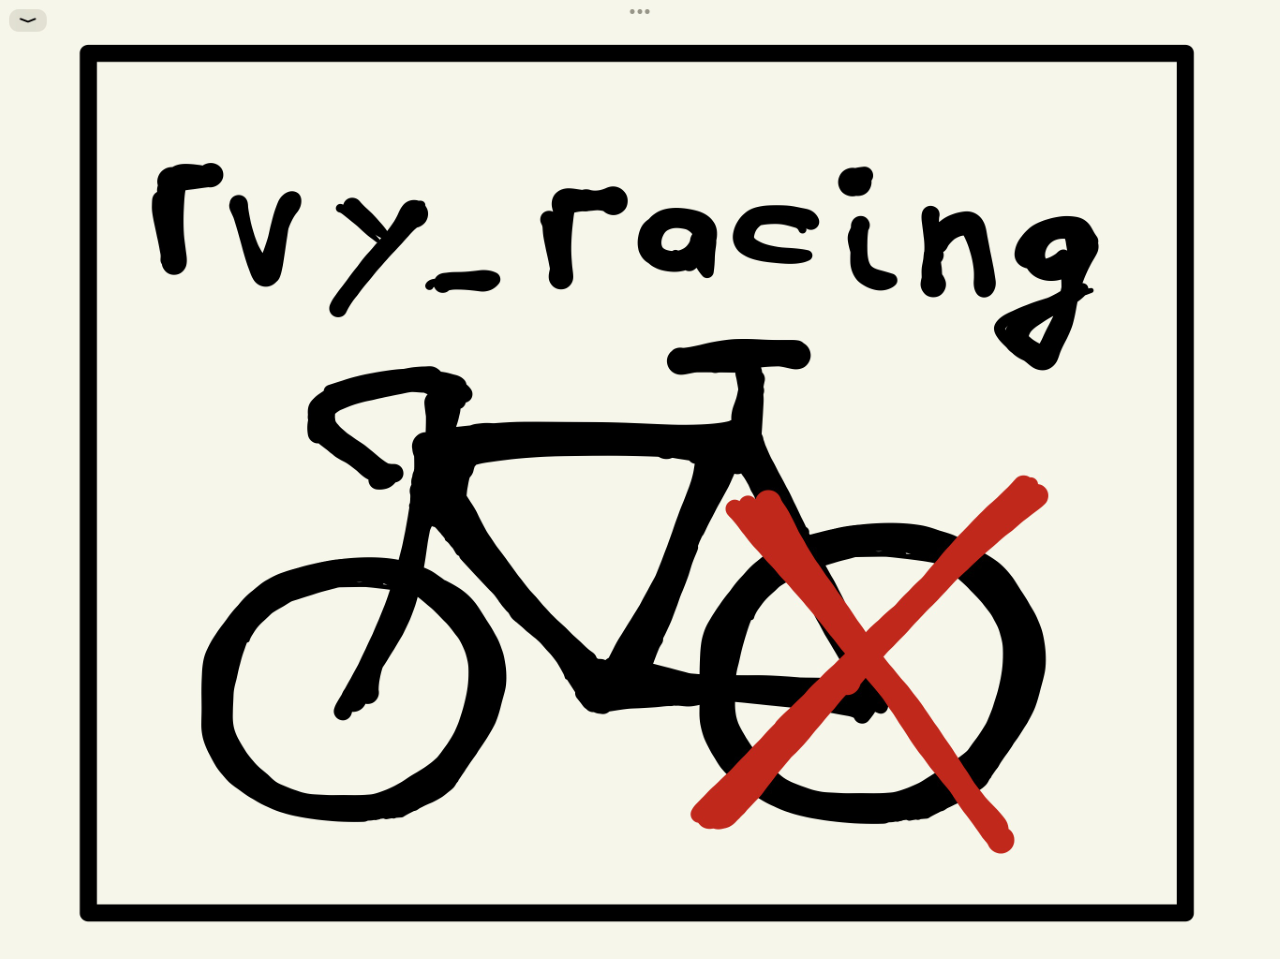 rvy_racing logo